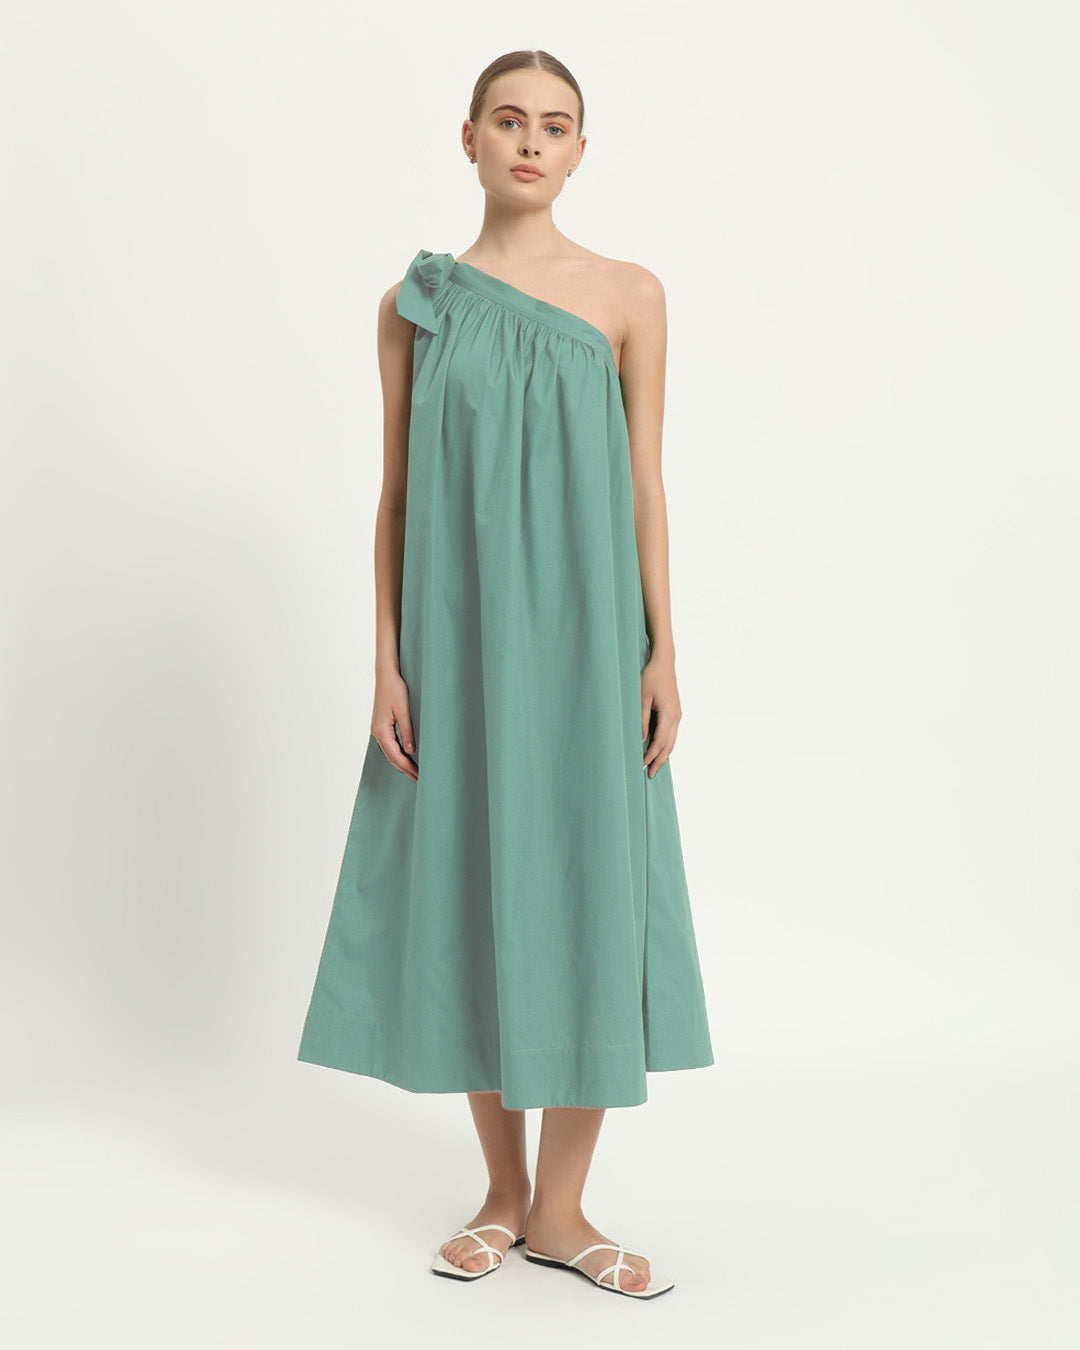 The Strehla Mint Cotton Dress